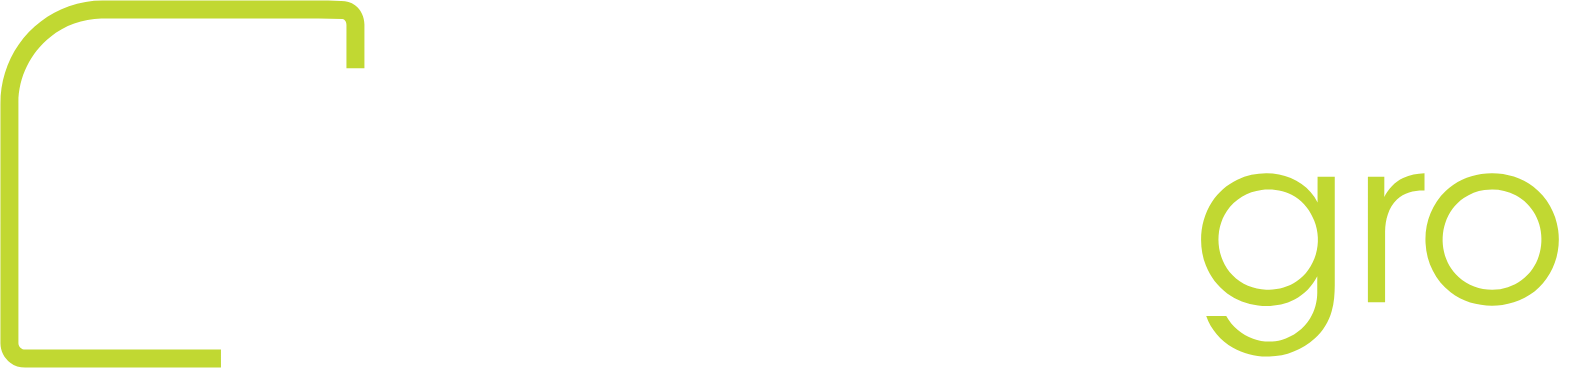 Urban-gro
 logo large for dark backgrounds (transparent PNG)